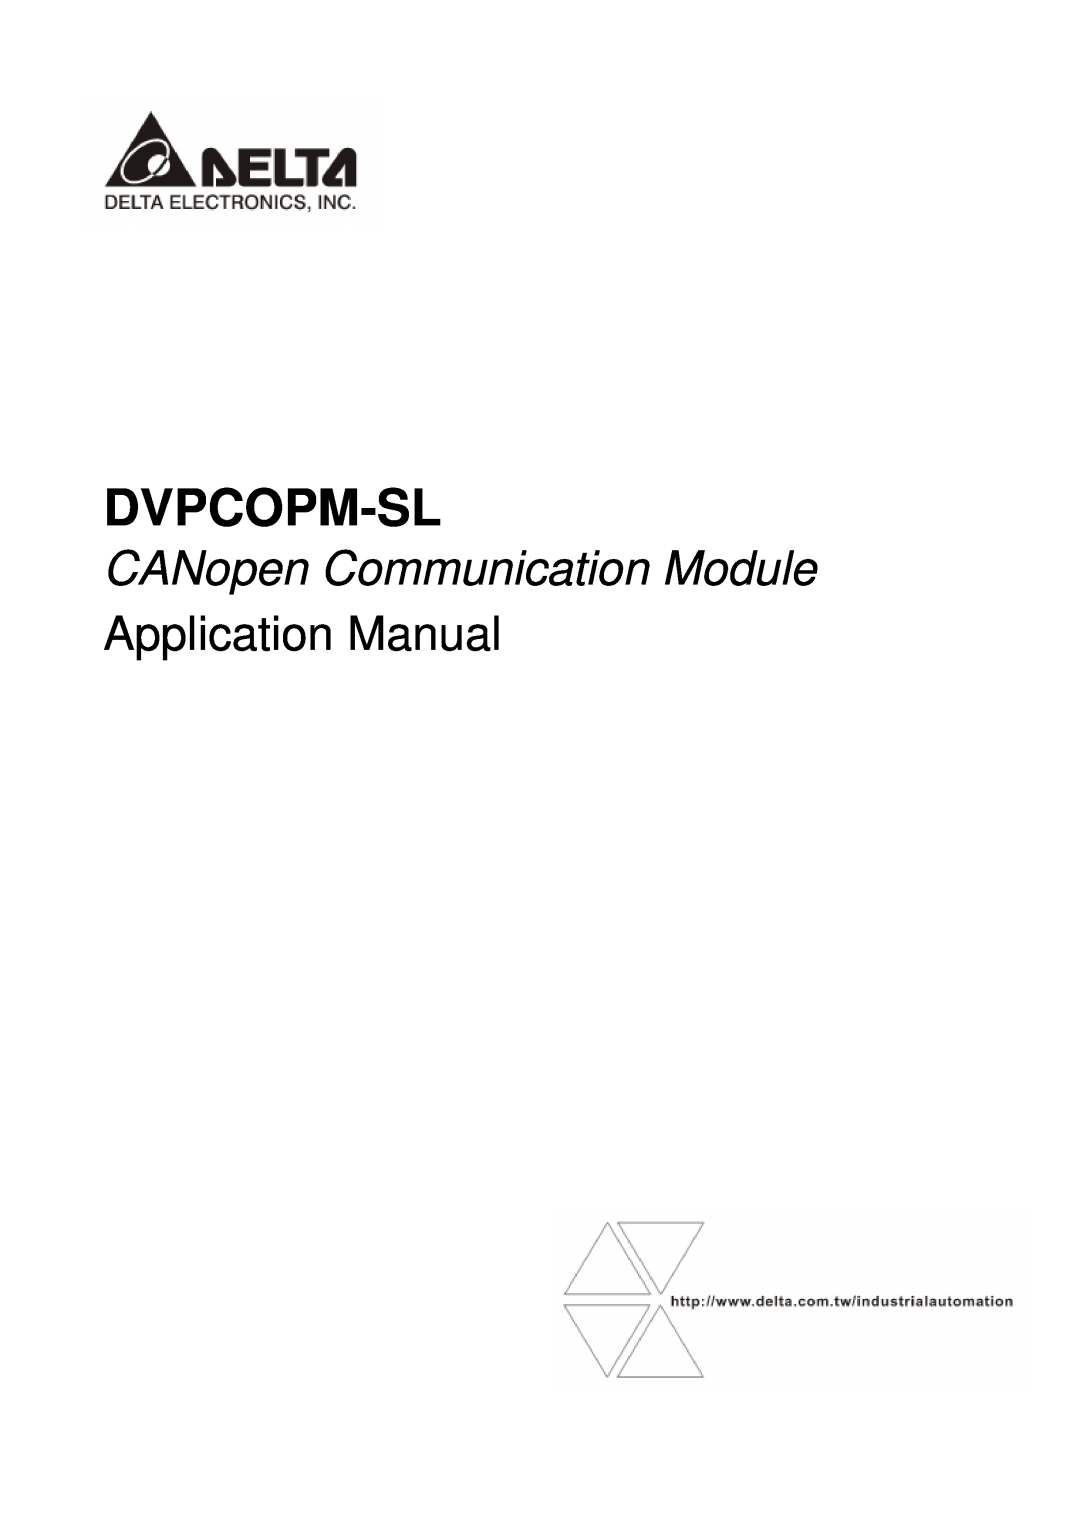 Delta Electronics DVPCOPM-SL manual Dvpcopm-Sl, CANopen Communication Module, Application Manual 